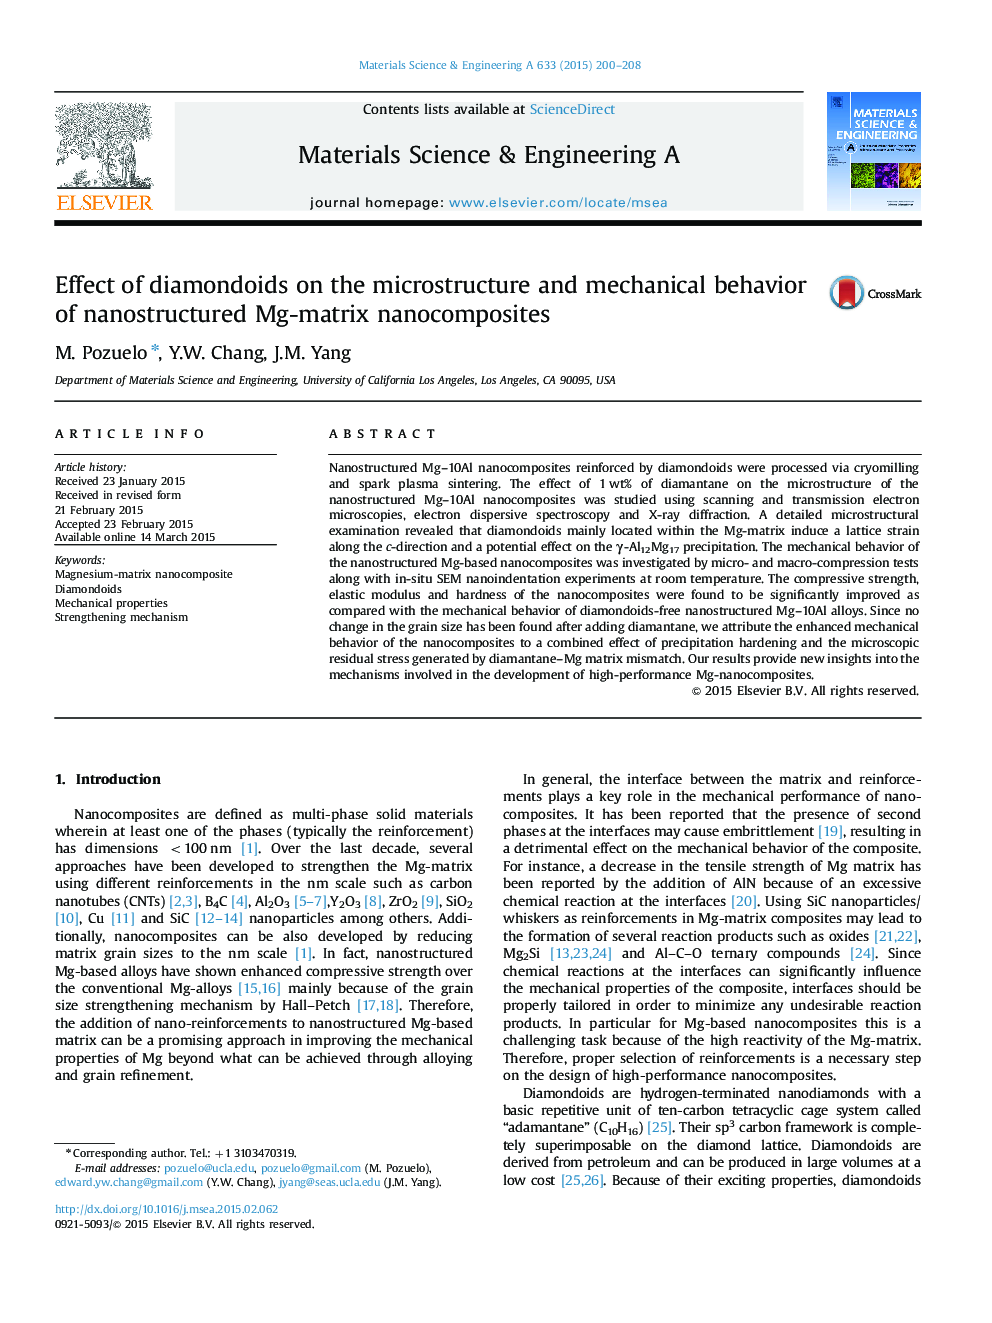 Effect of diamondoids on the microstructure and mechanical behavior of nanostructured Mg-matrix nanocomposites